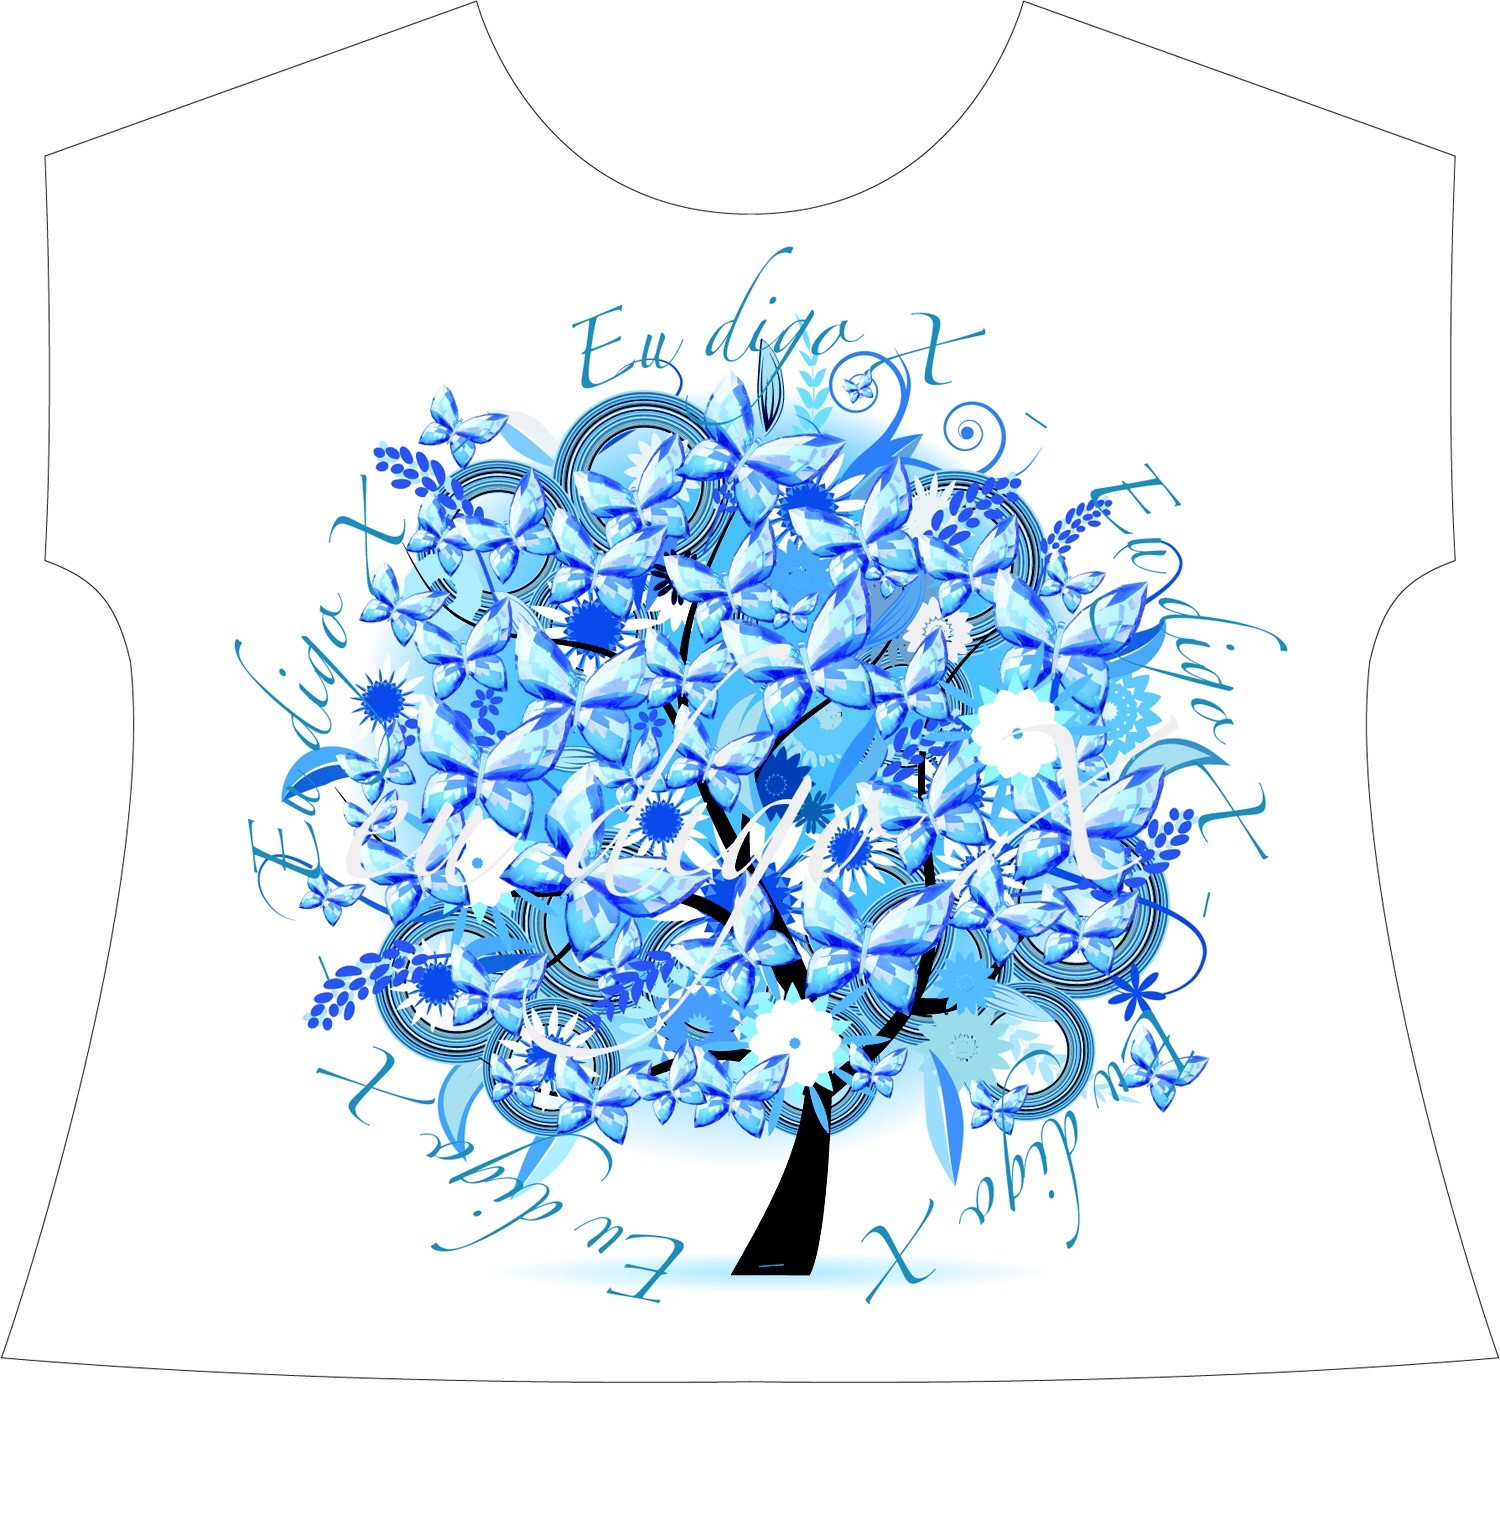 Camiseta Desenho Infantil - Japan Society - Camisetas de Anime e